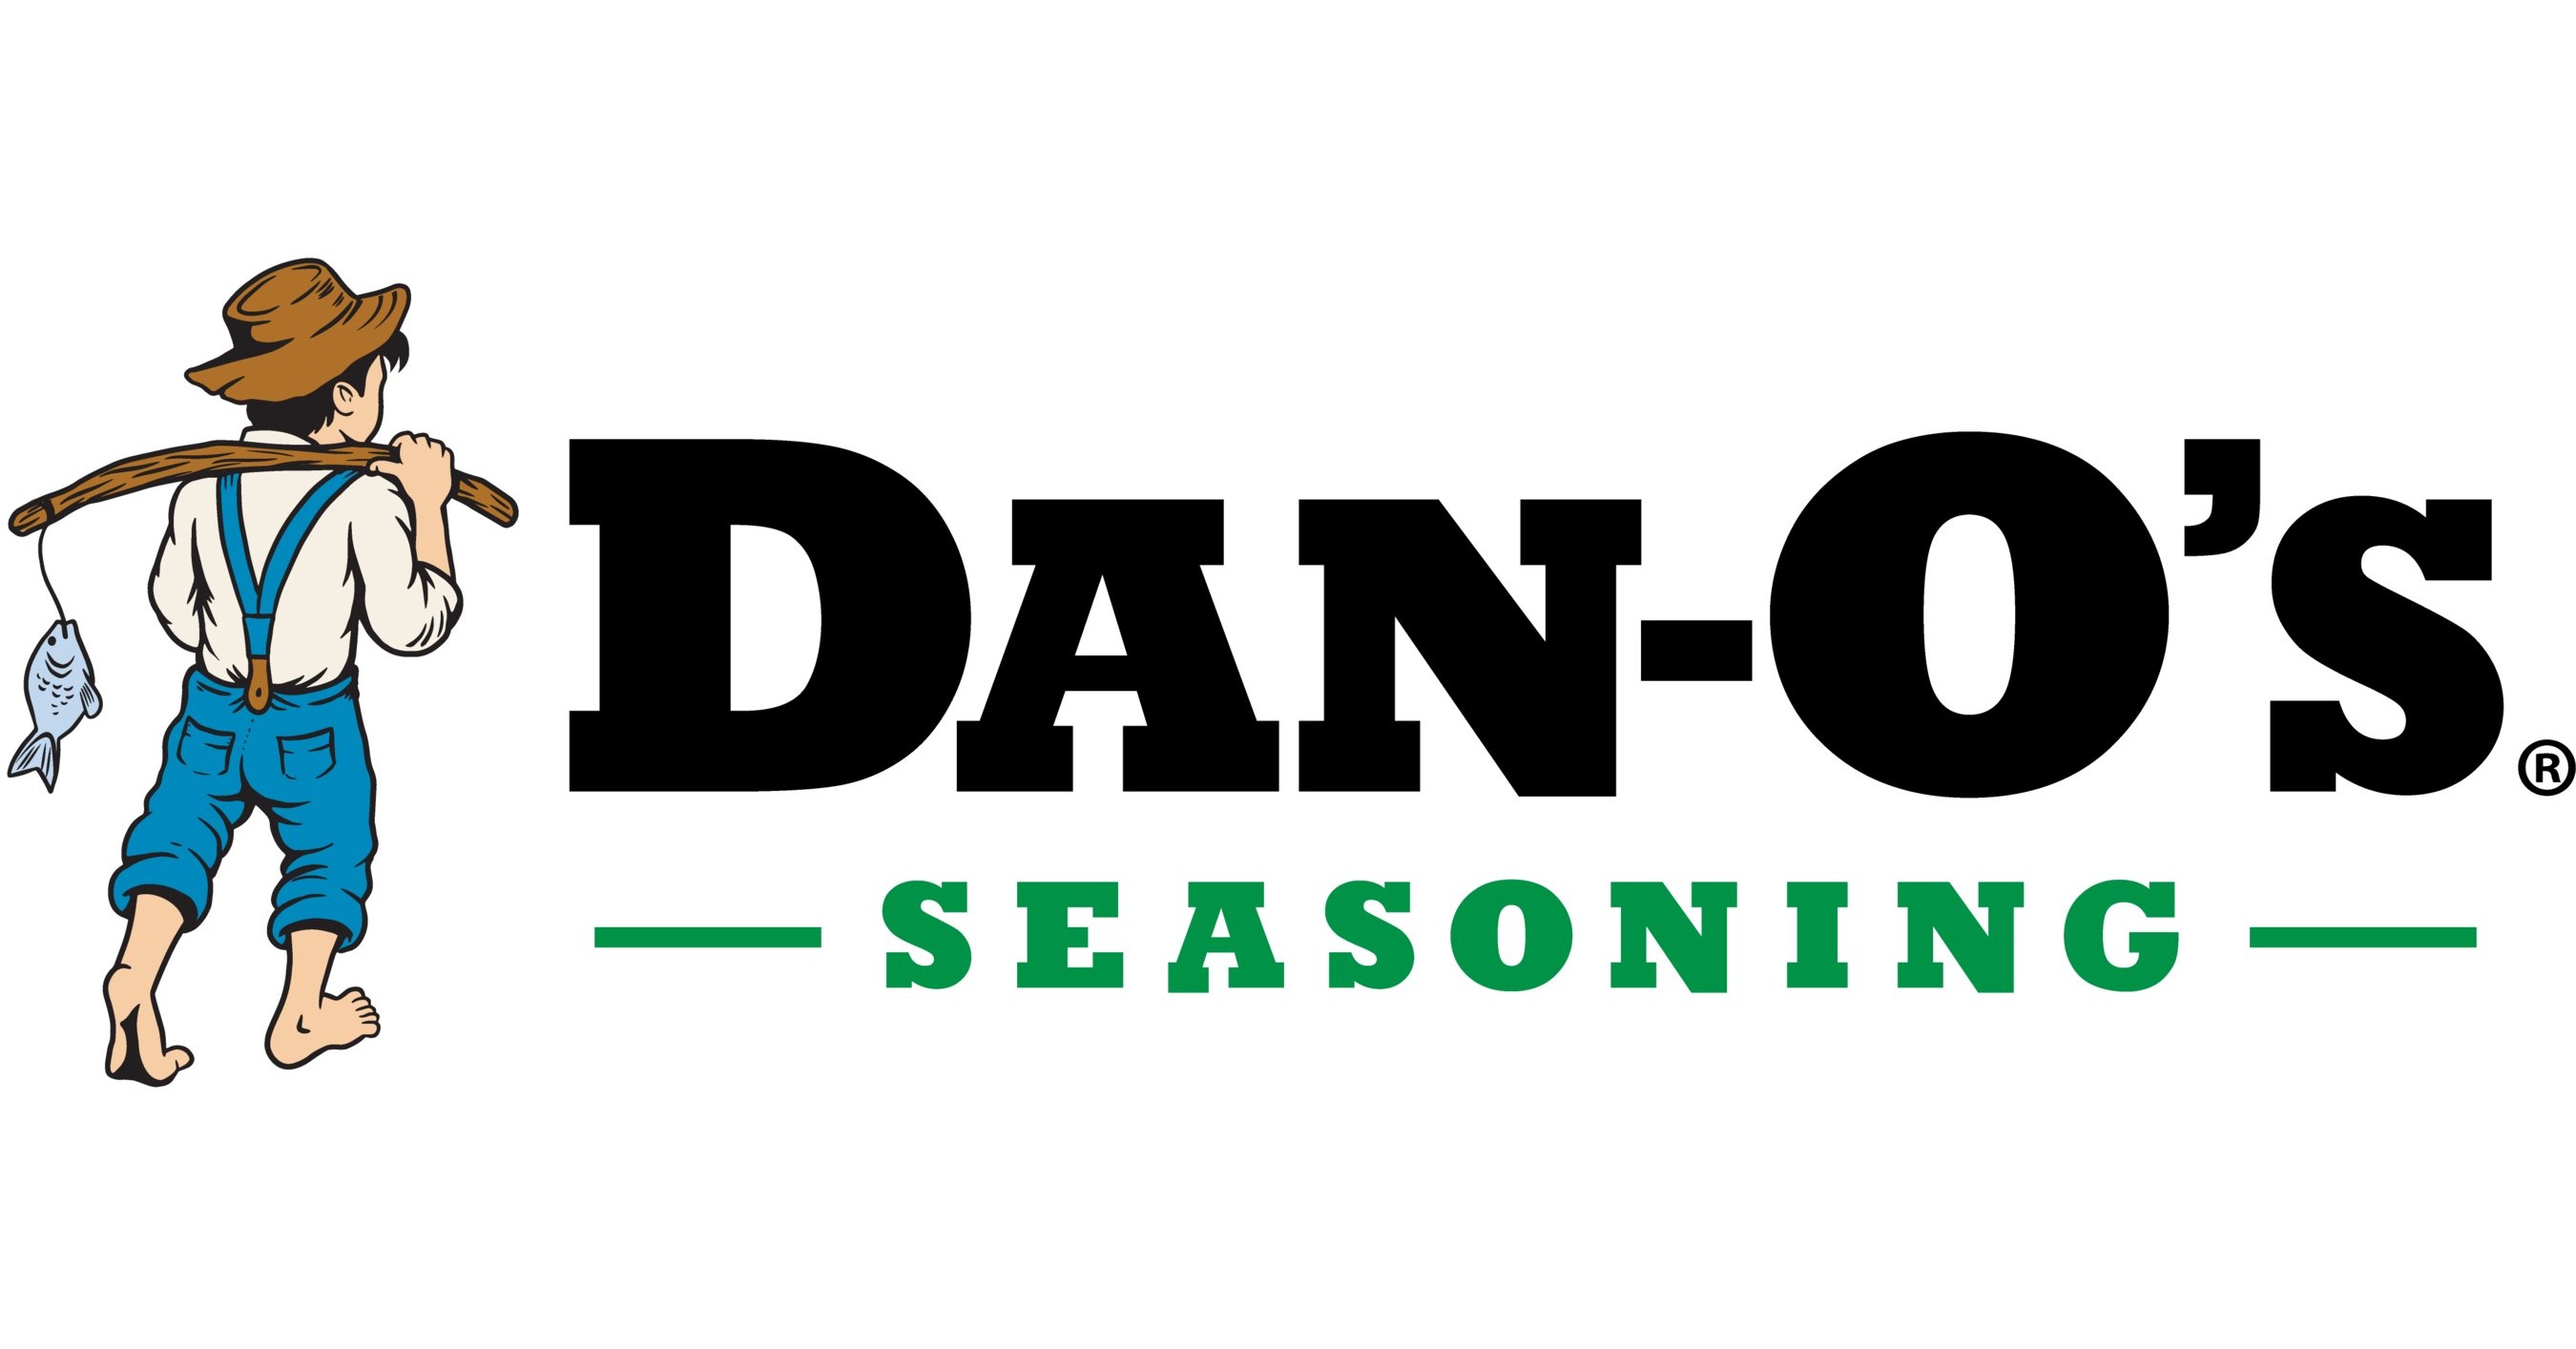 Dan-O's Seasoning using social media to spread flavor